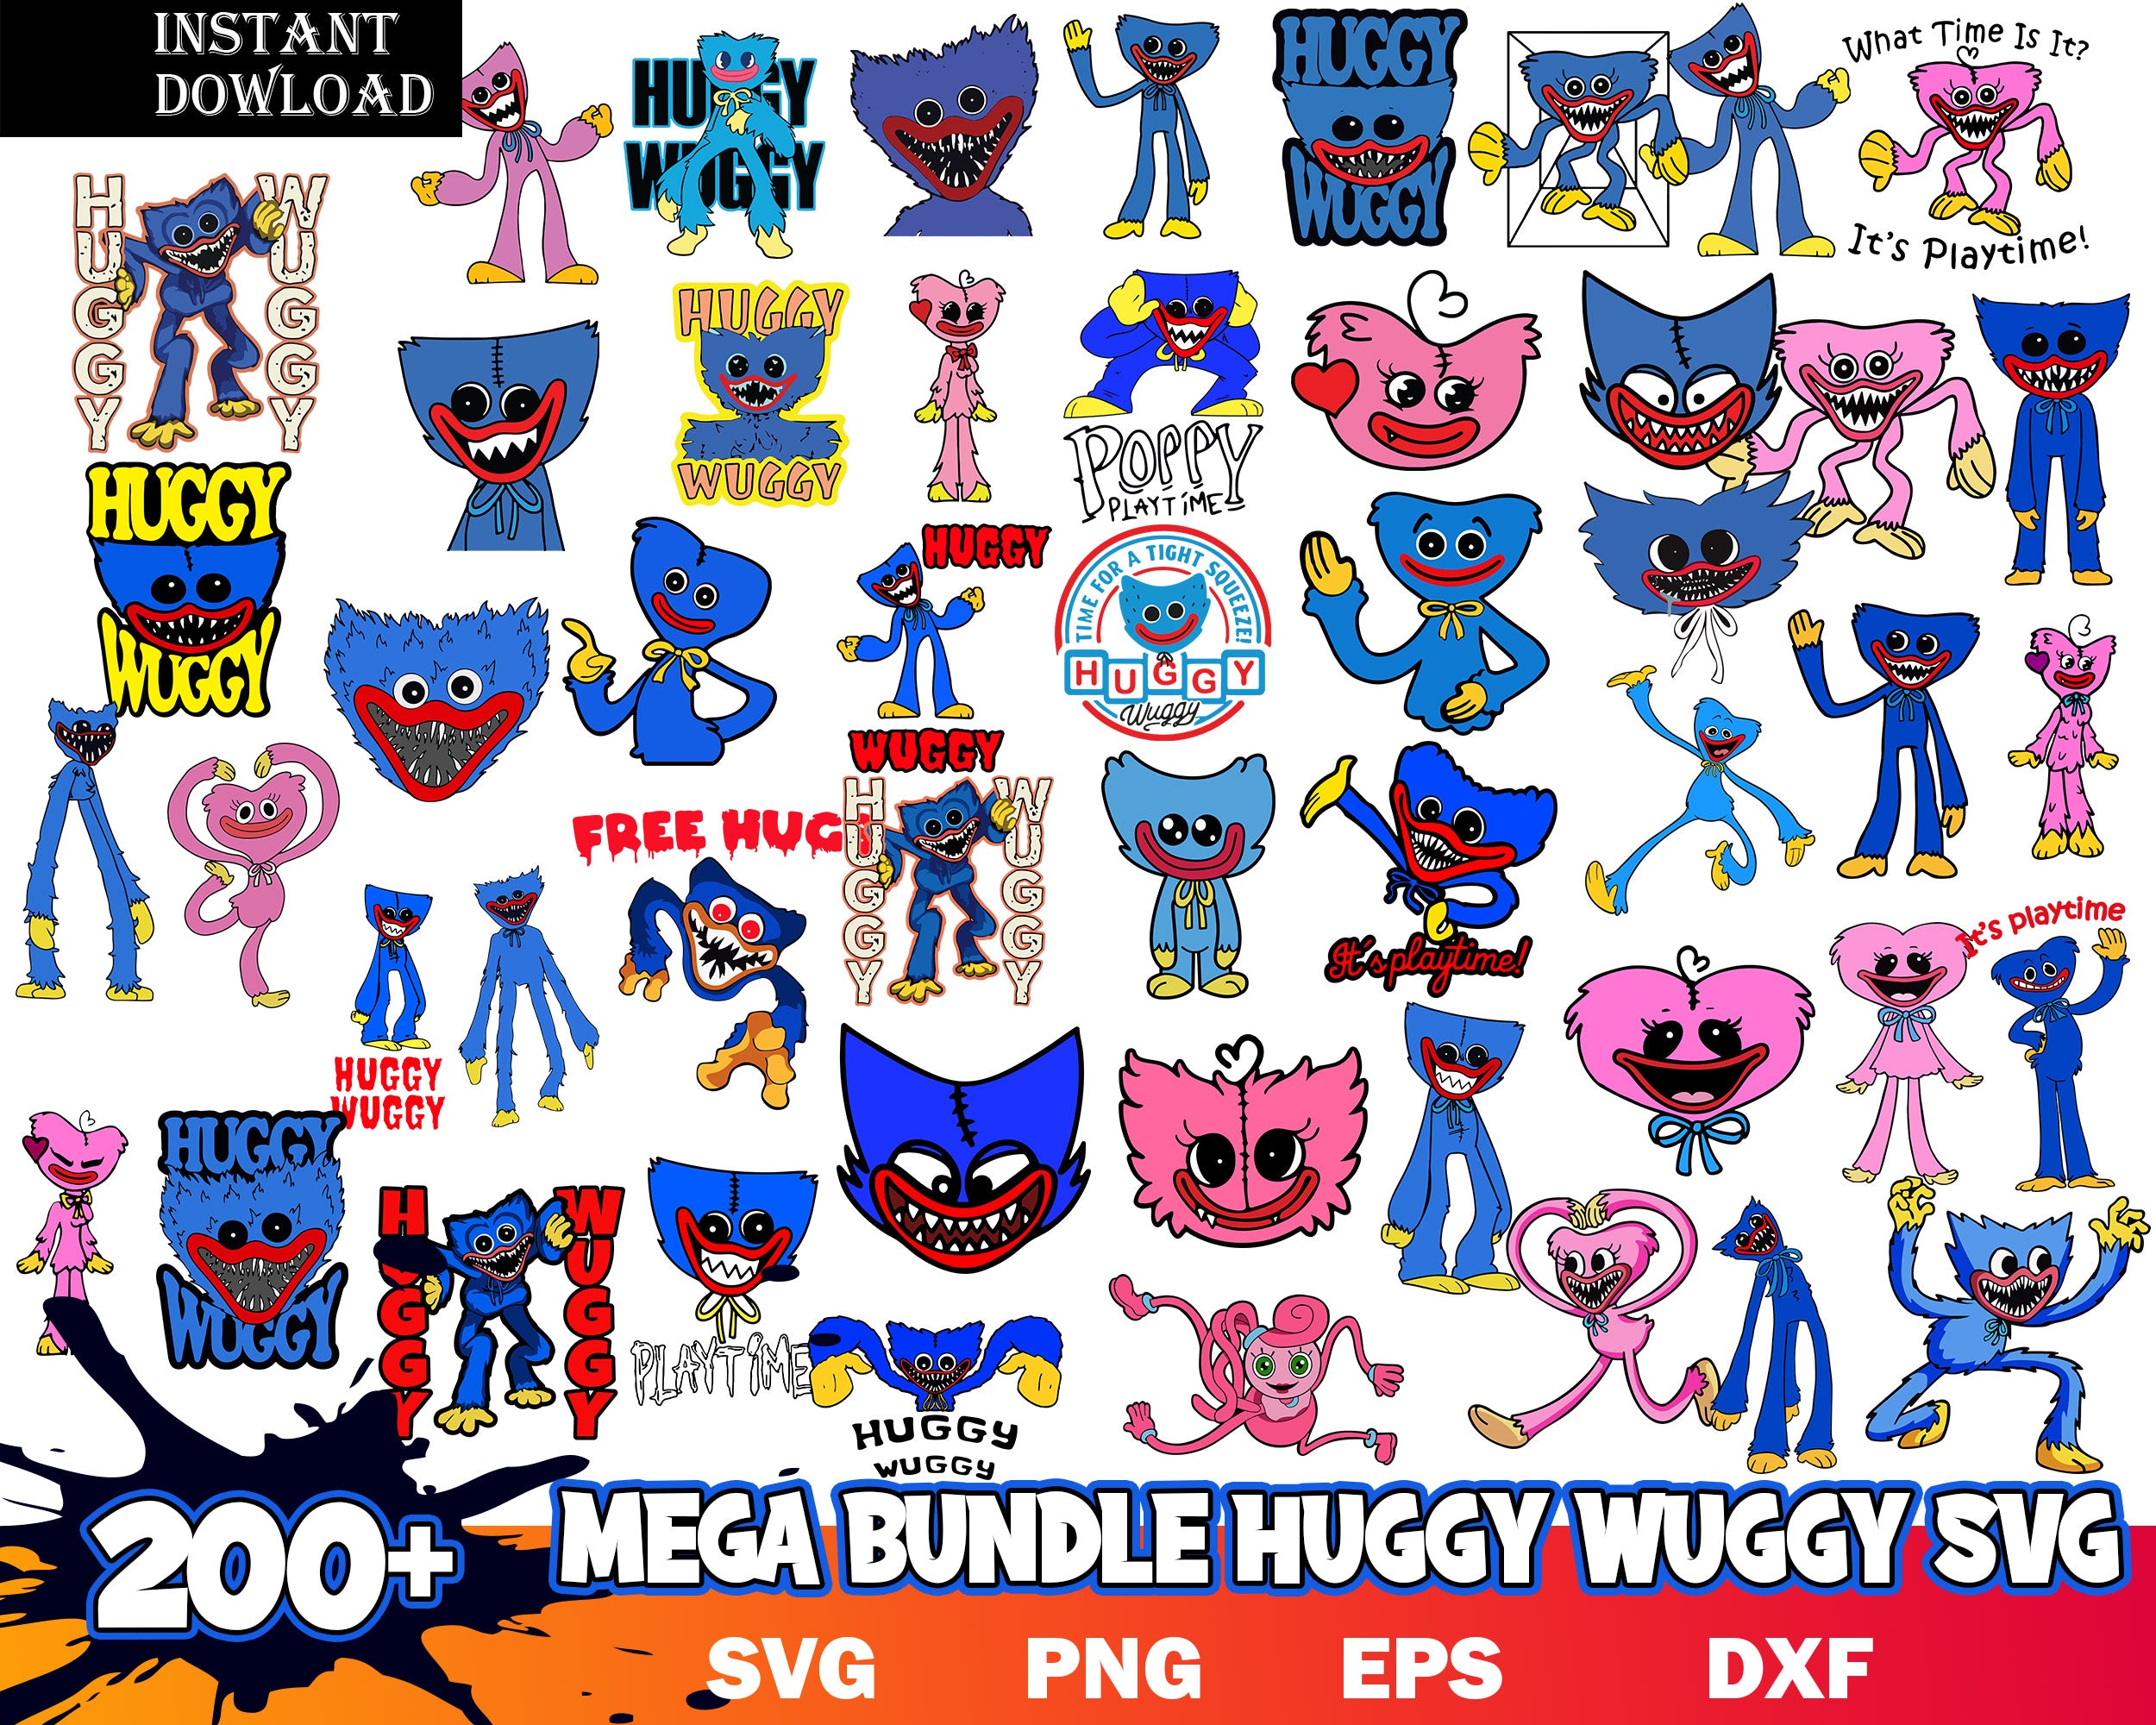 200+ Mega Huggy Wuggy SVG bundle, Wuggy svg files, Gaming characters svg, Digital file